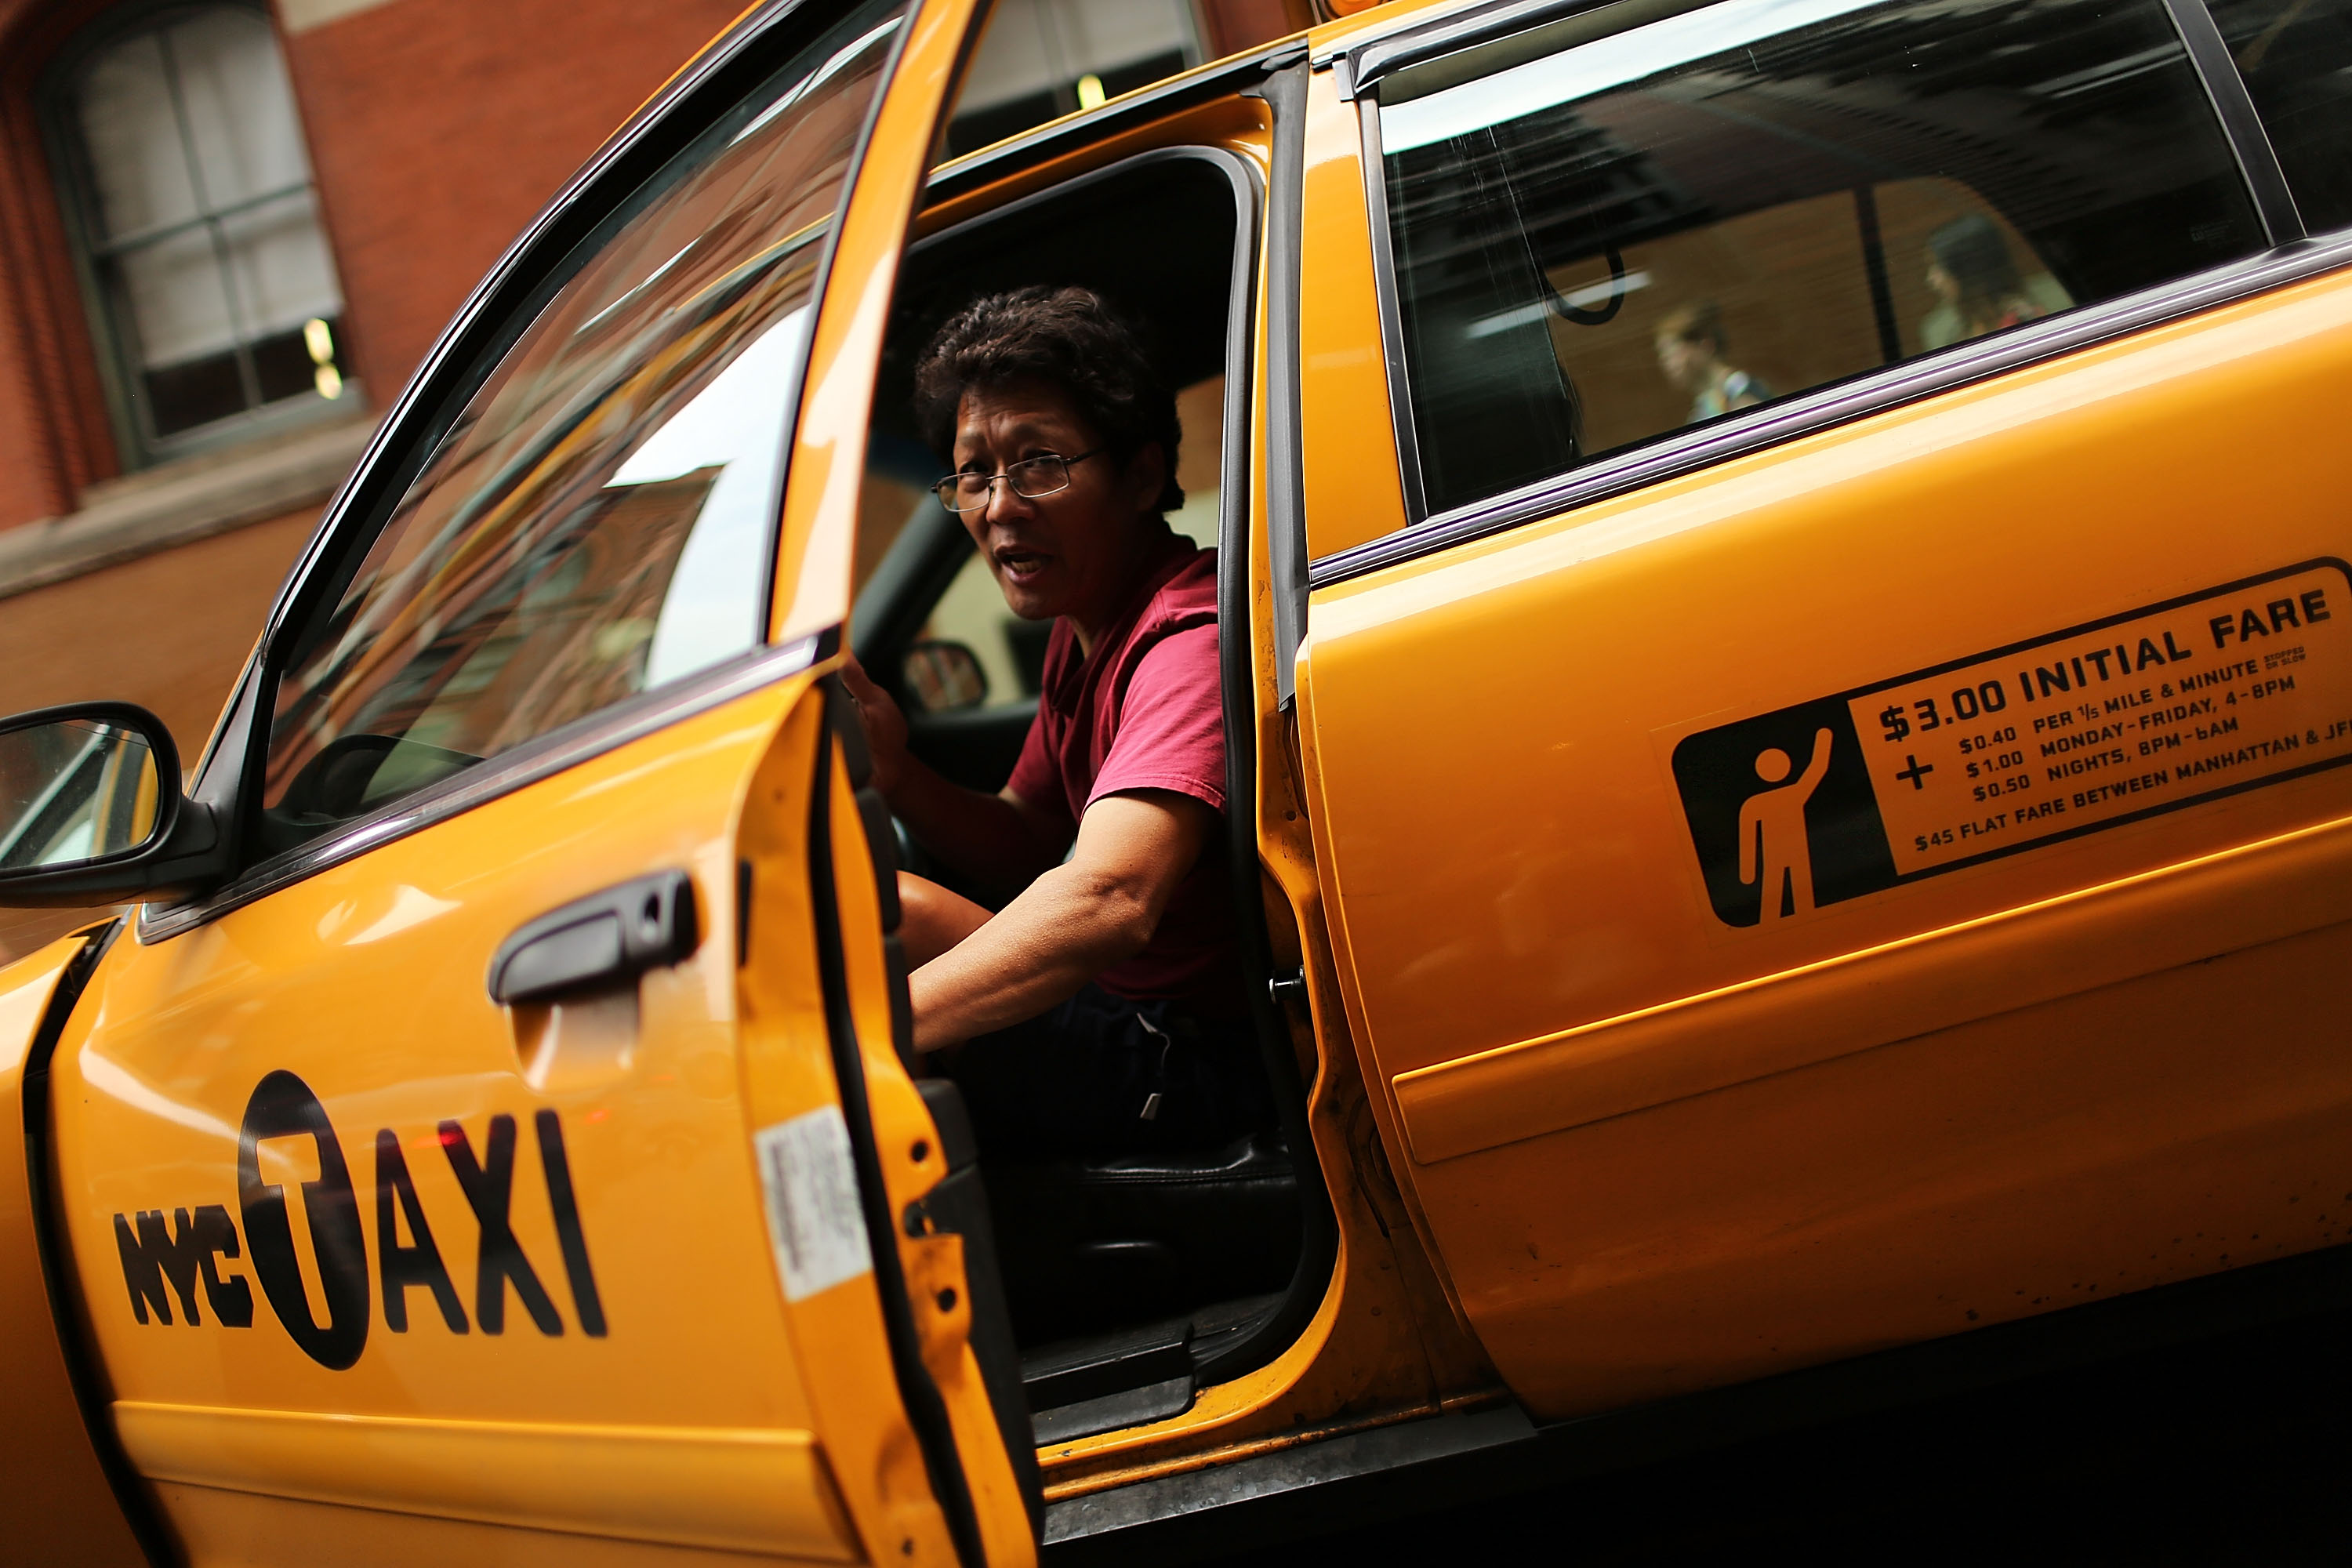 New York City Taxi Fares Rise